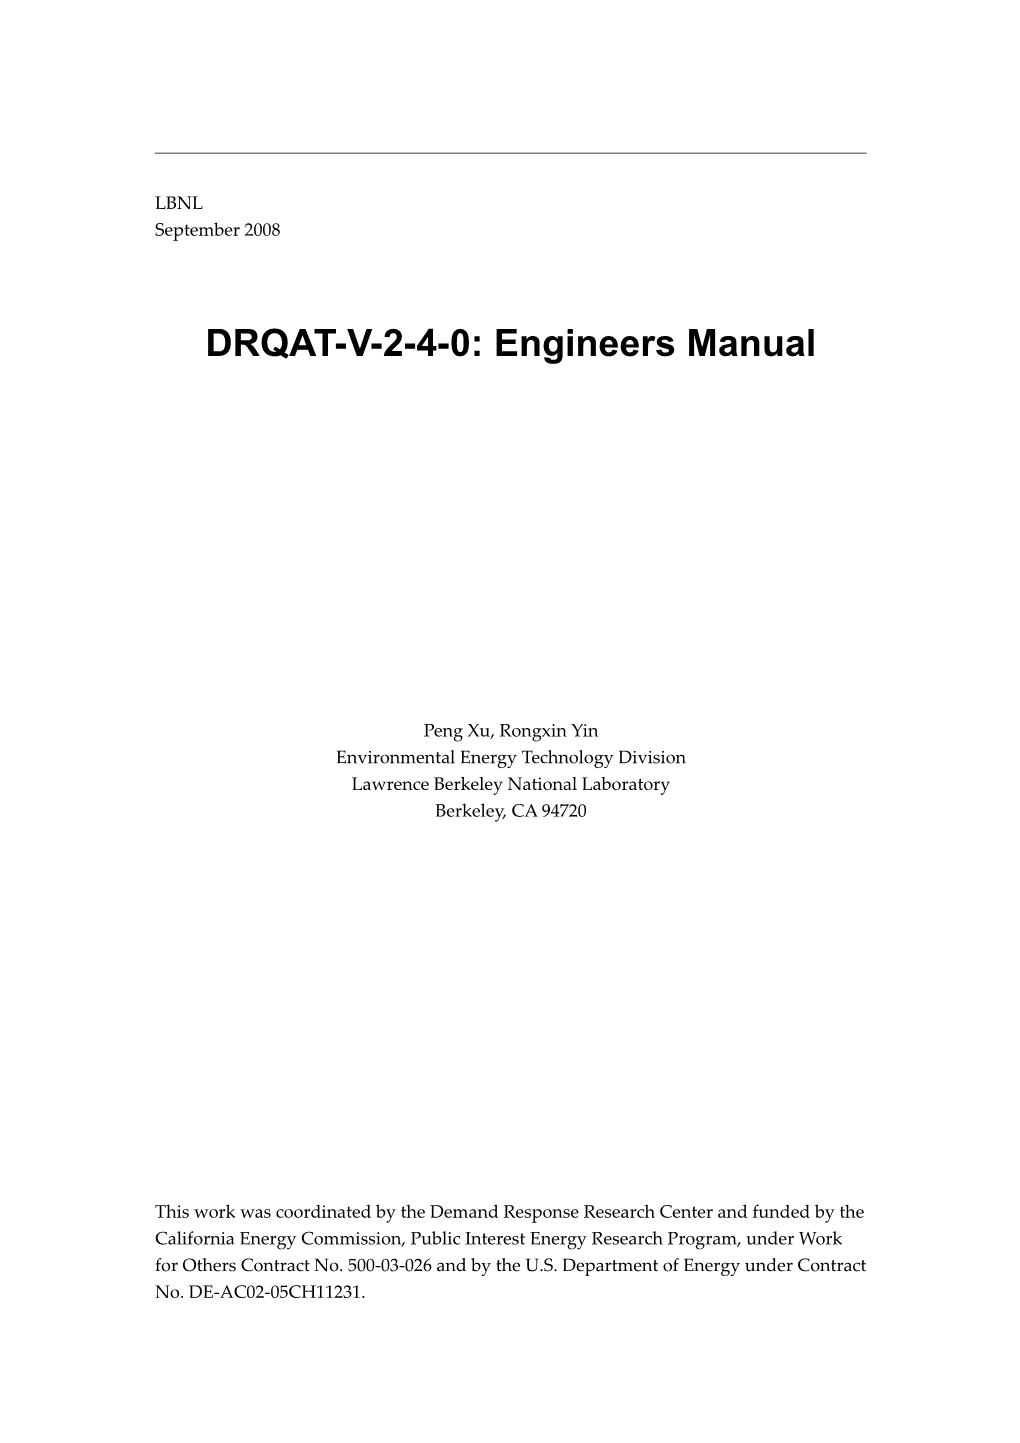 DRQAT-V-2-4-0: Engineers Manual